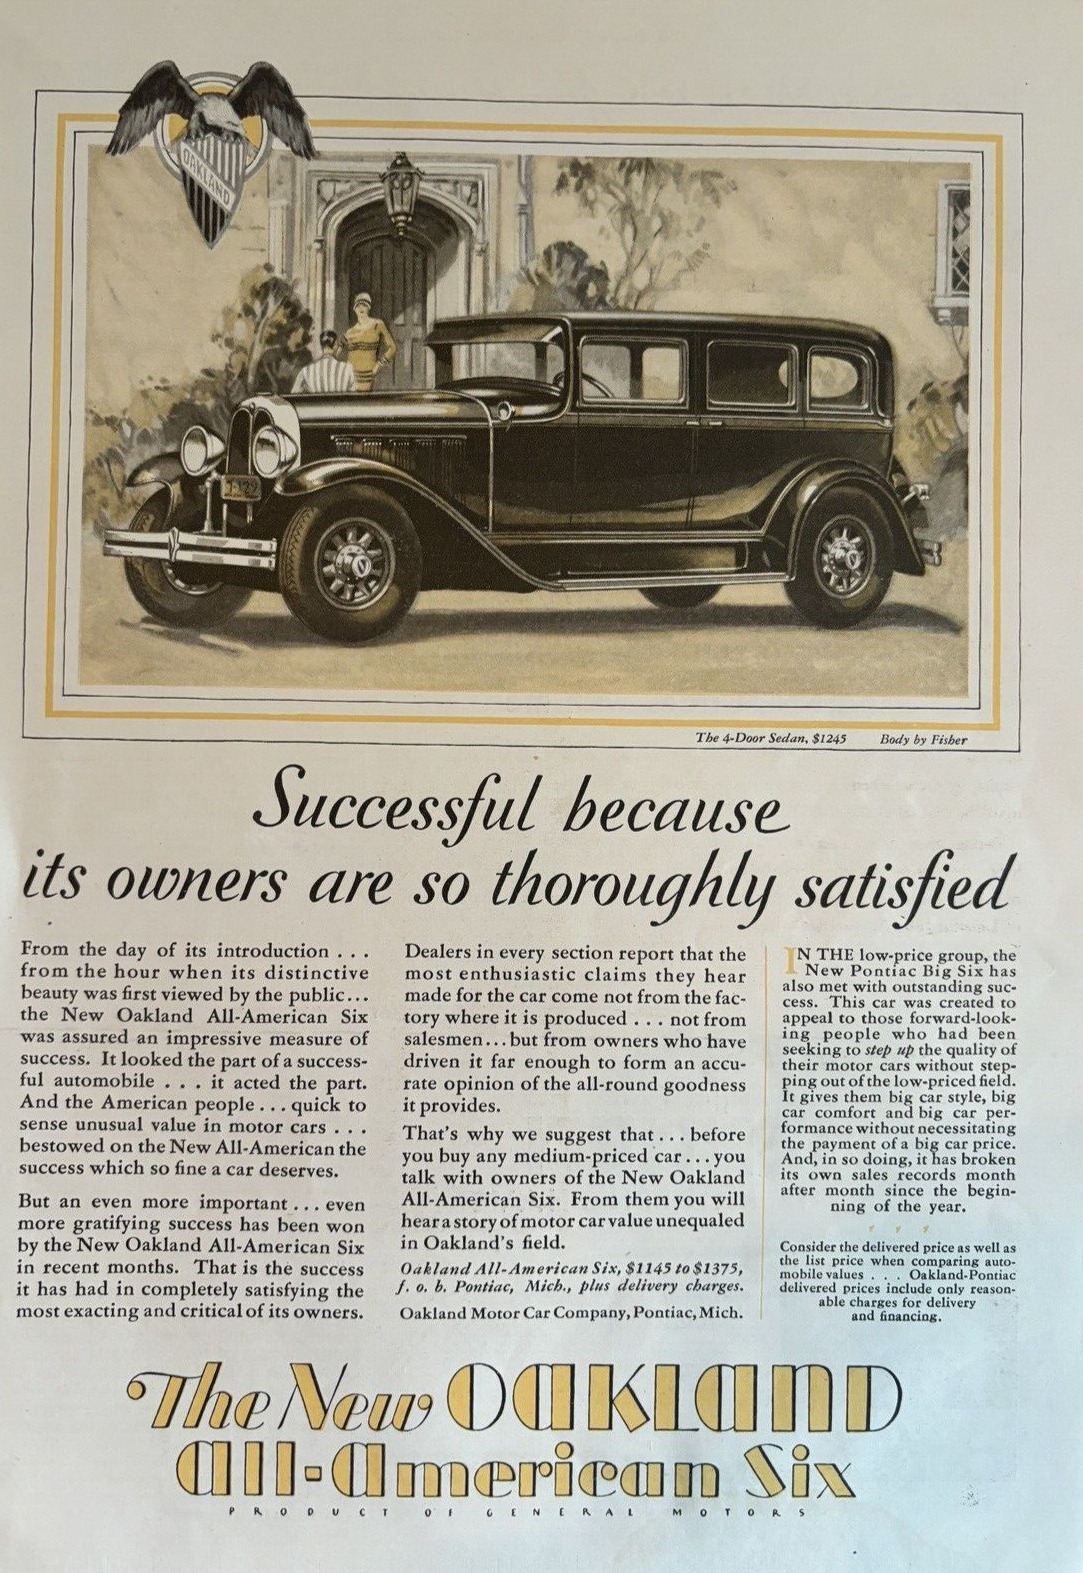 1929 Oakland All-American Six Auto 4 Door Sedan General Motors Vintage Print Ad